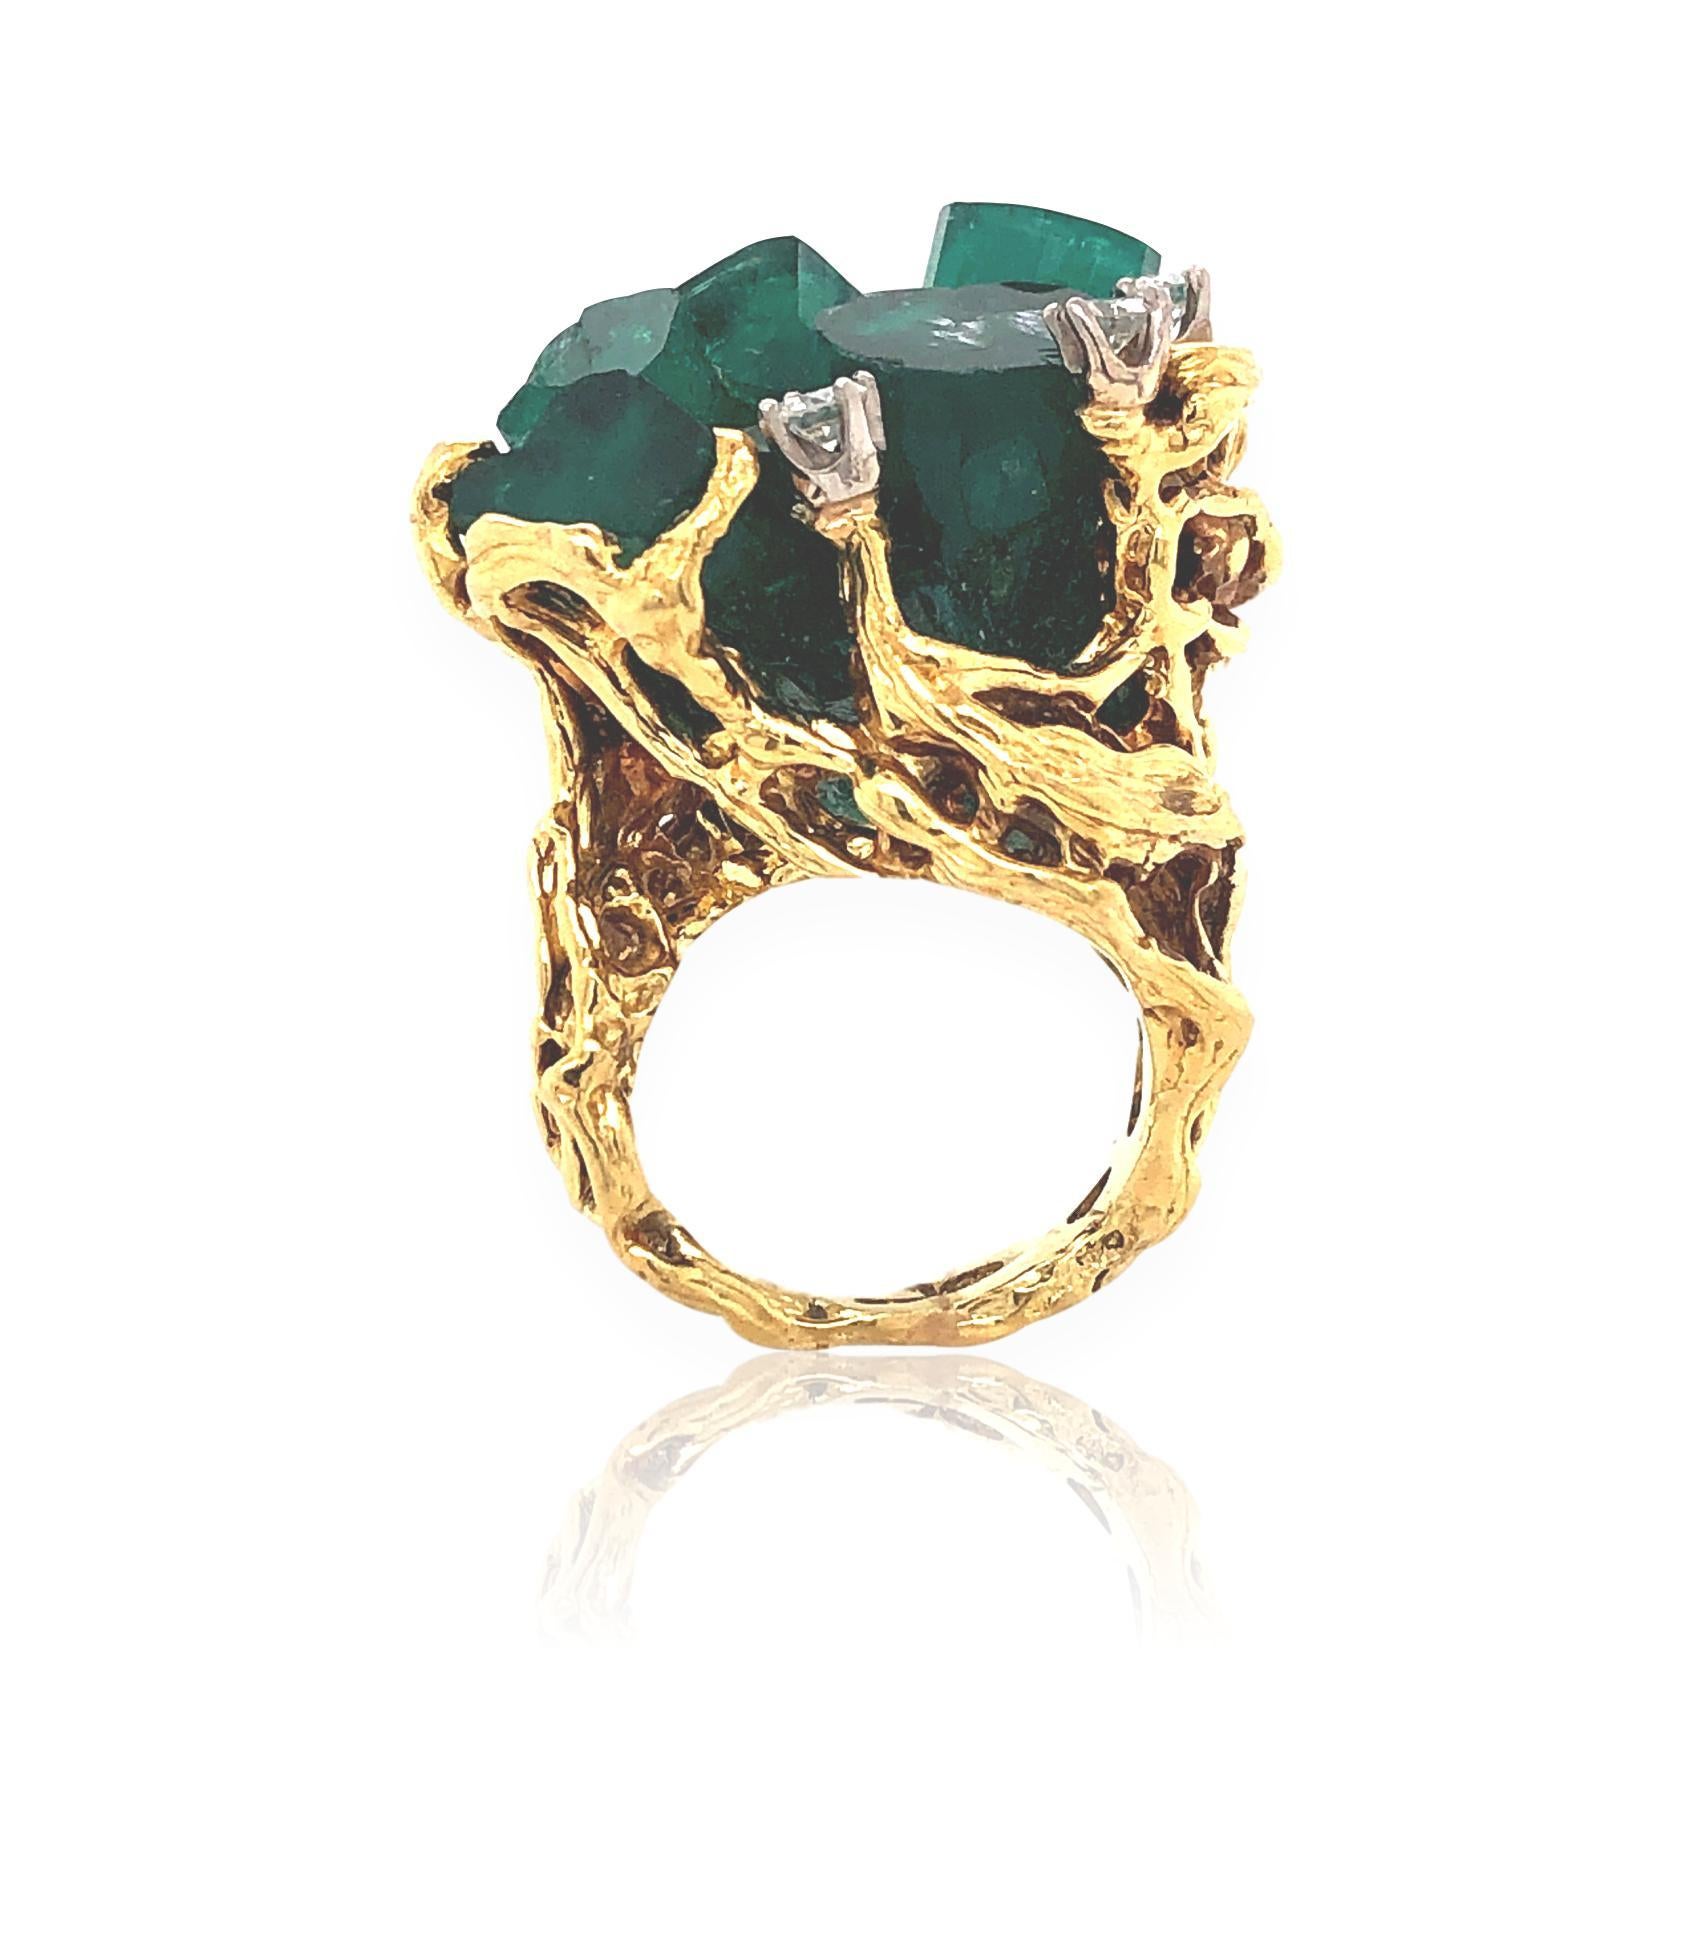 Organic rough emerald and diamond ring. The 18k  1